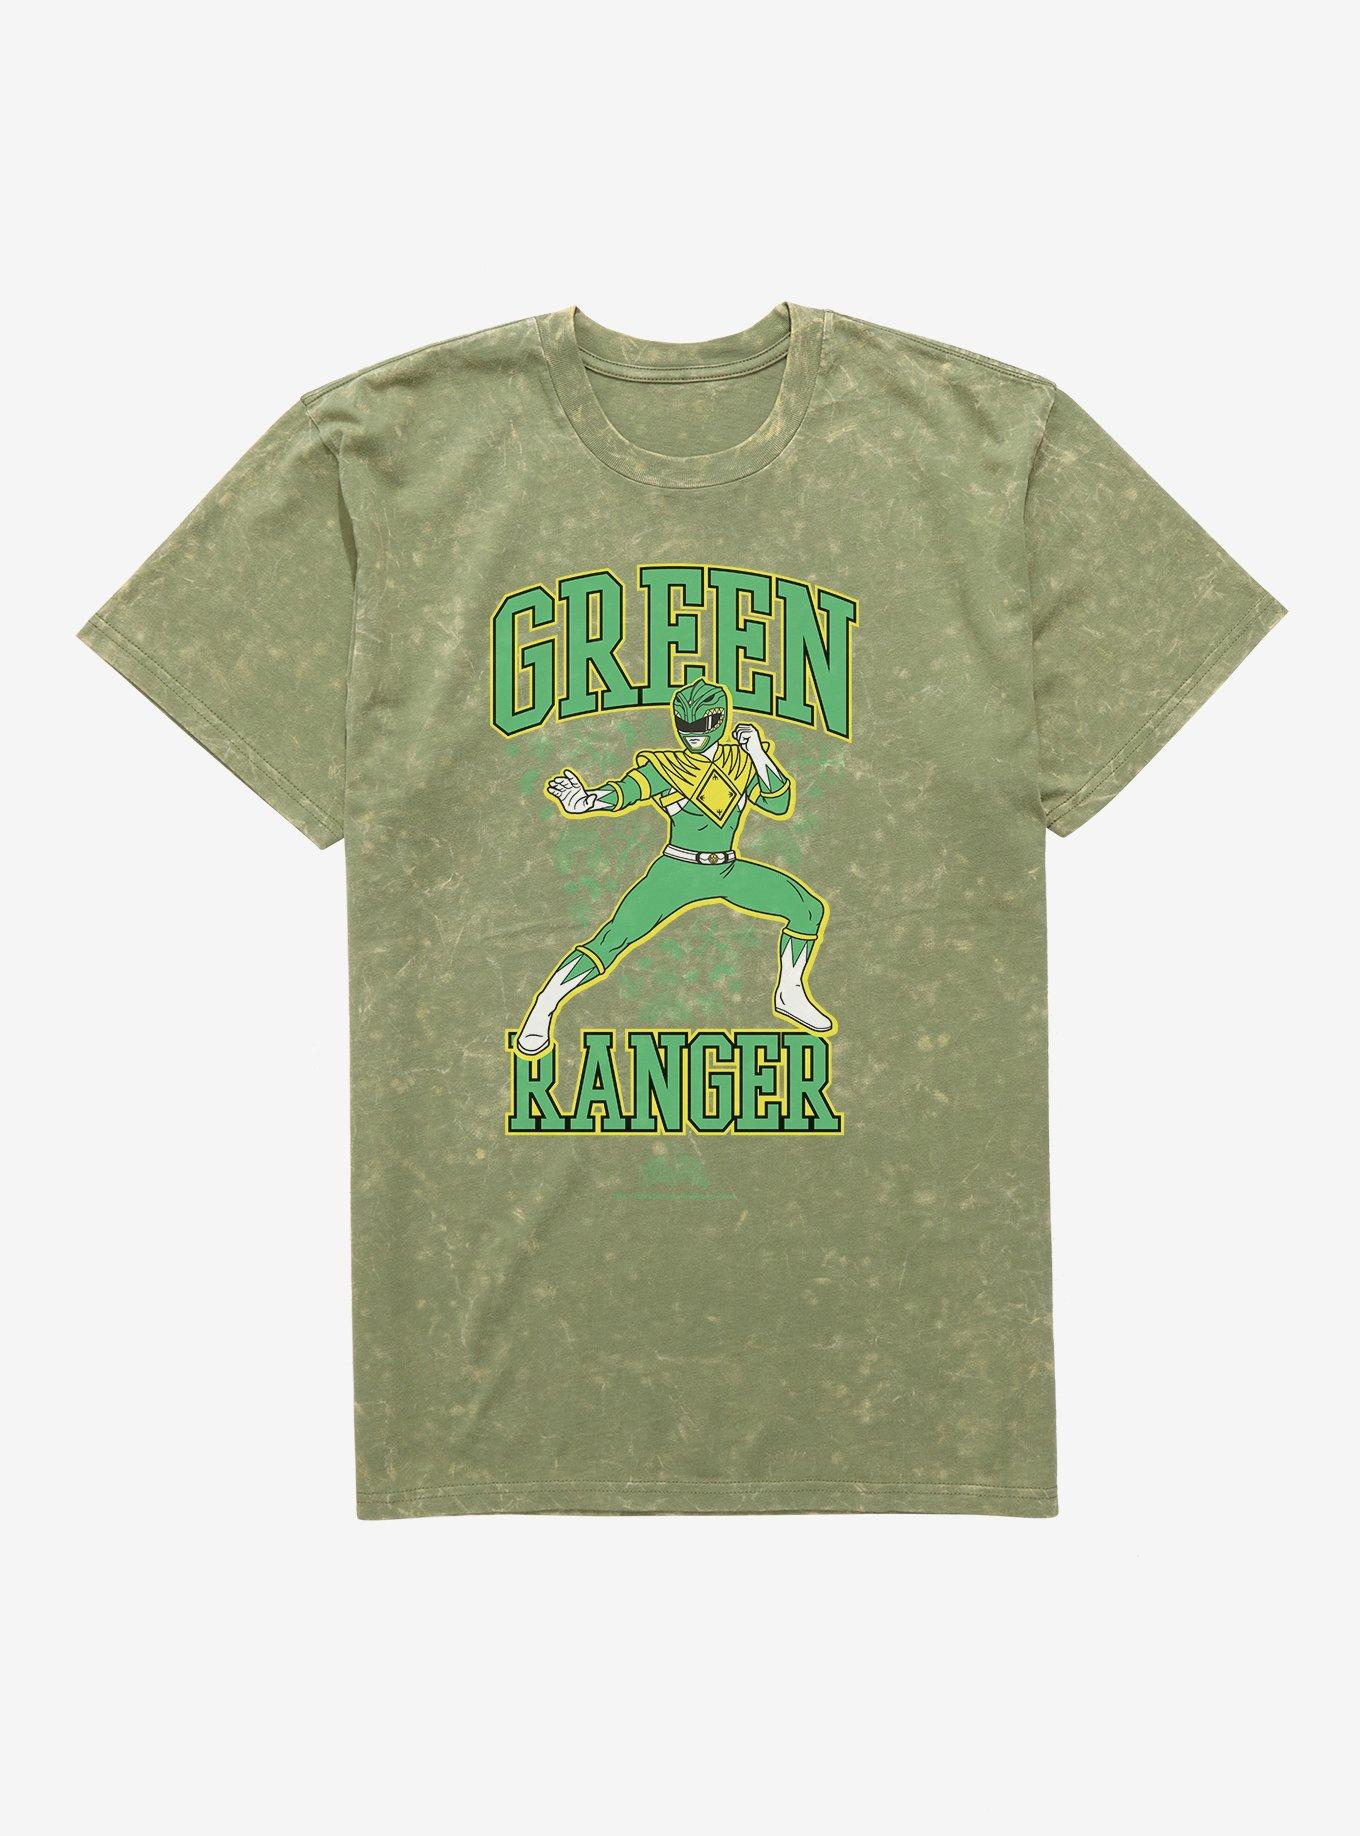 Mighty Morphin Power Rangers Green Ranger Clover Mineral Wash T-Shirt